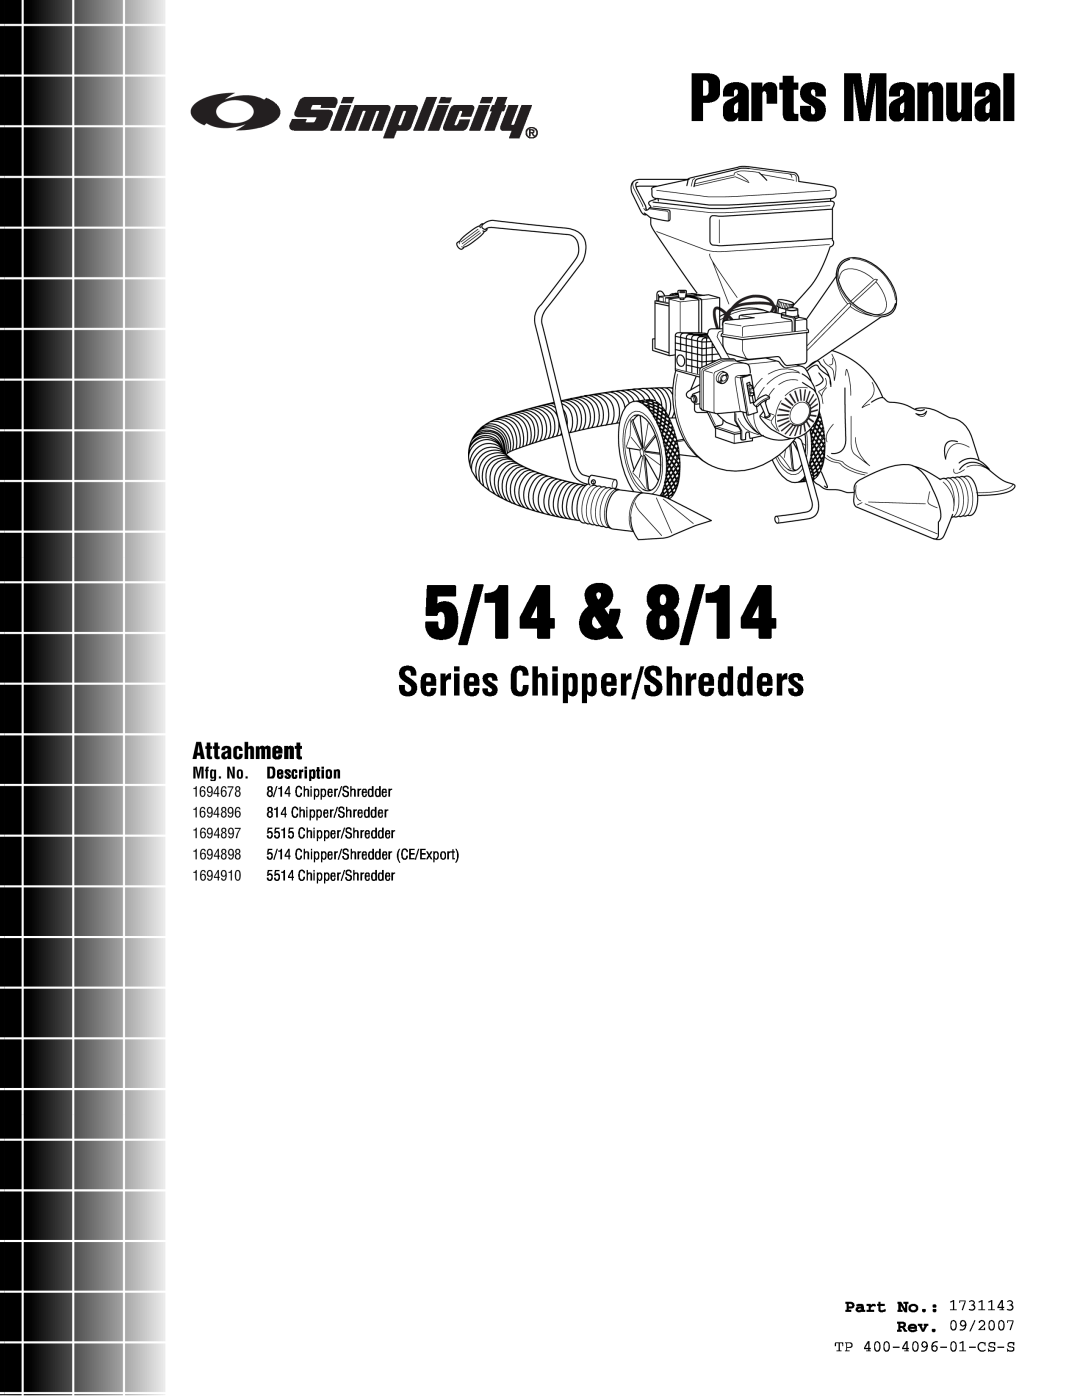 Simplicity 5/14 Series, 8/14 Series manual Attachment, Part No, Mfg. No. Description, 5/14 & 8/14, Parts Manual 